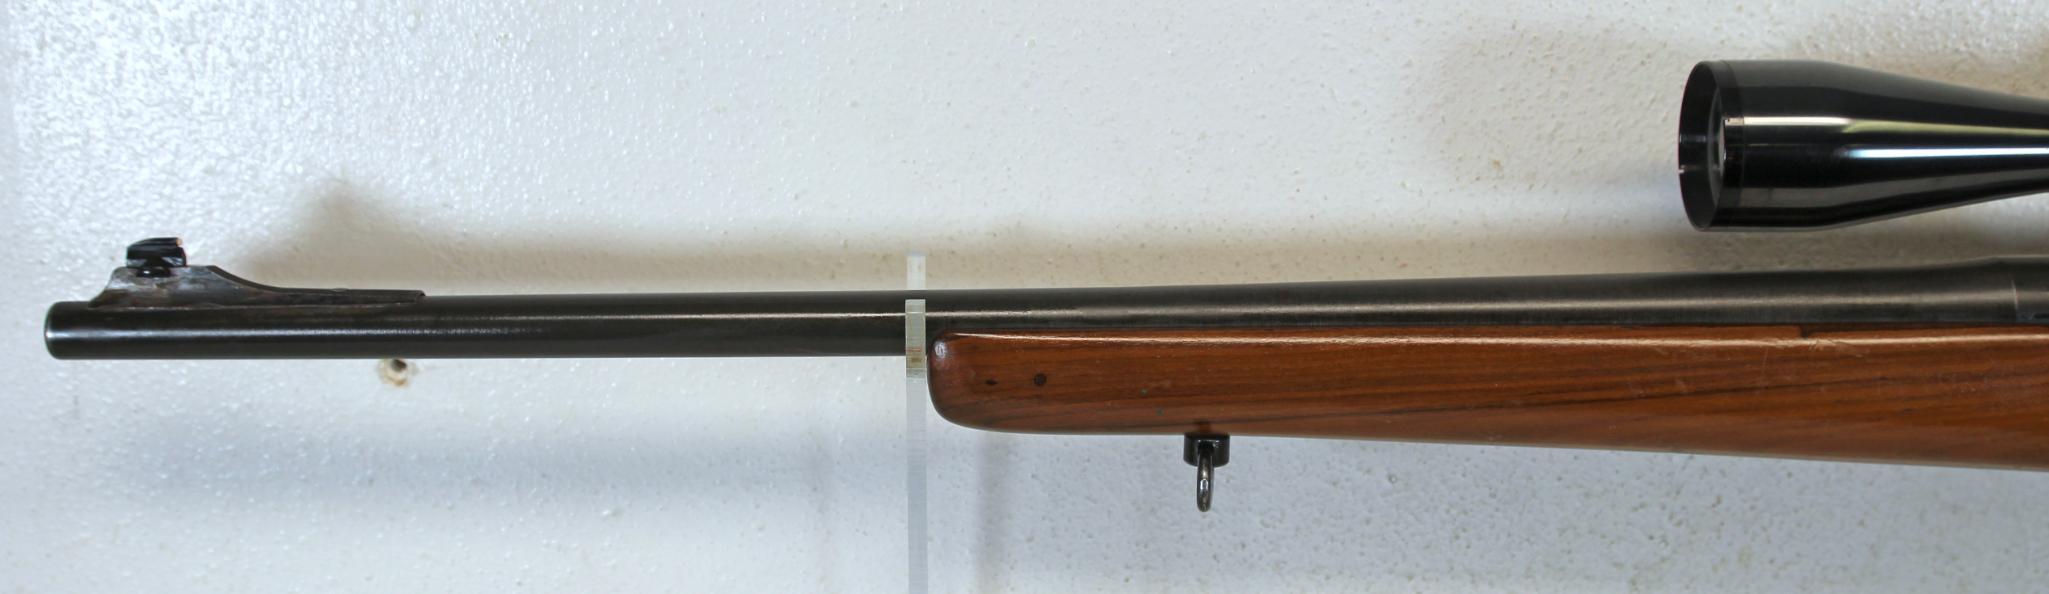 U.S. Smith Corona 03-A3 Sporterized .30-06 Bolt Action Rifle w/Weaver K6-E Scope SN#3653776...